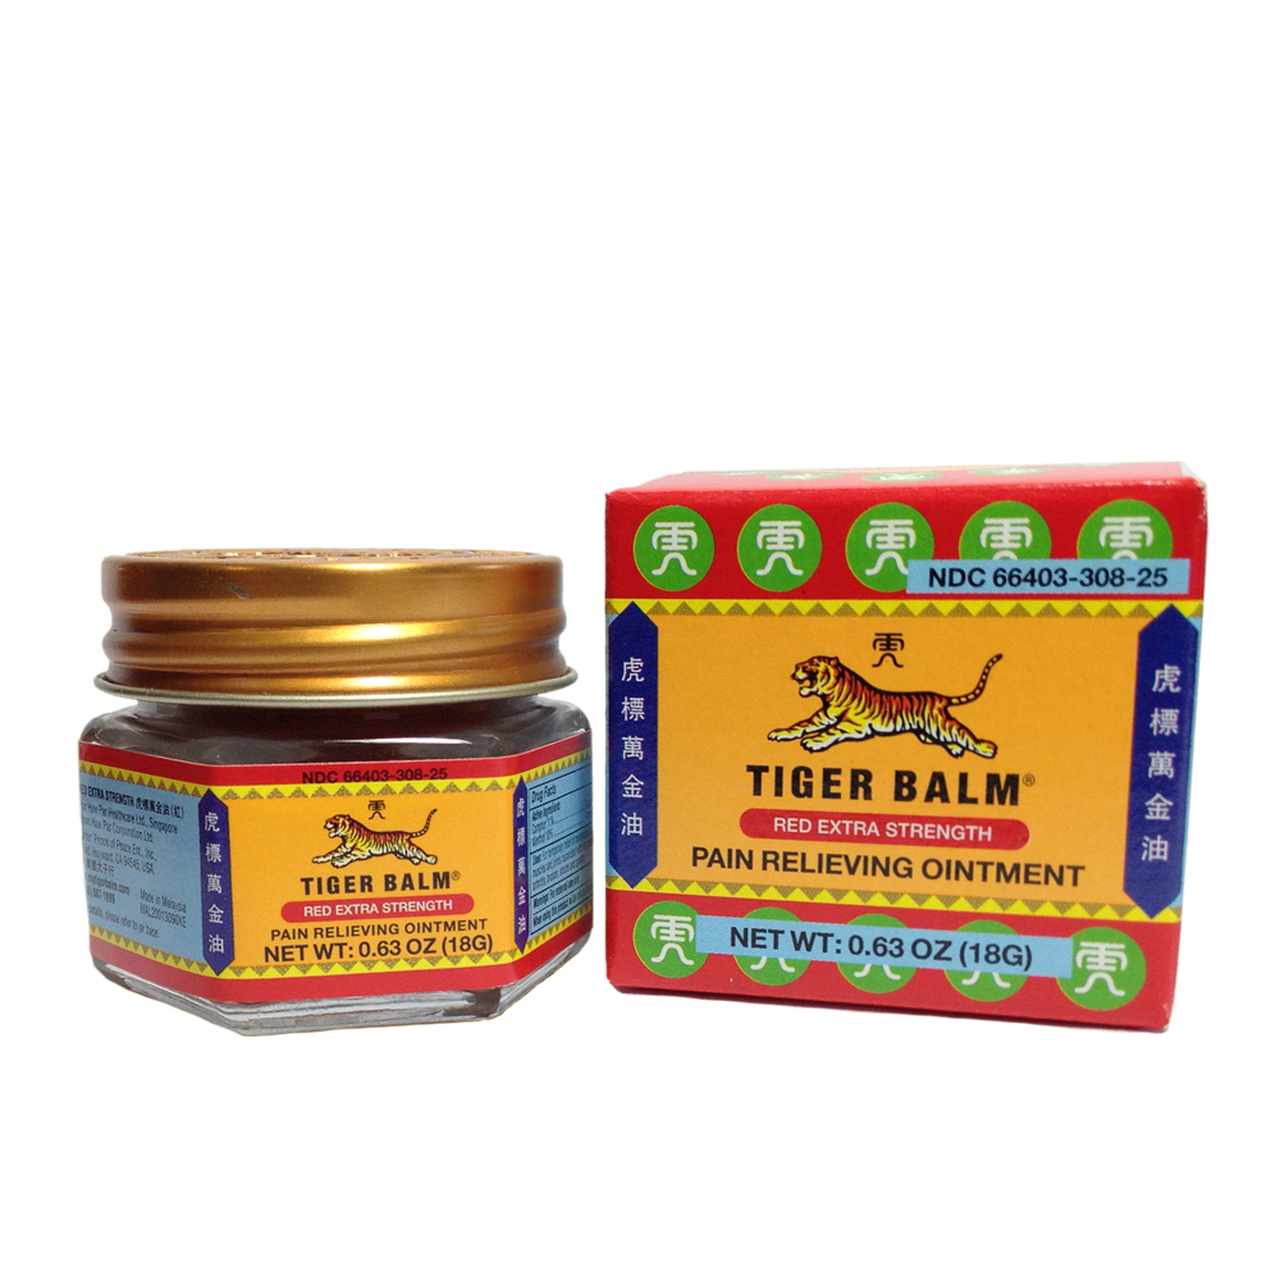 Мазь Тигровый бальзам, 9 мл, производитель Хавпар; Red ointment Tiger Balm, 9 ml, Hawpar